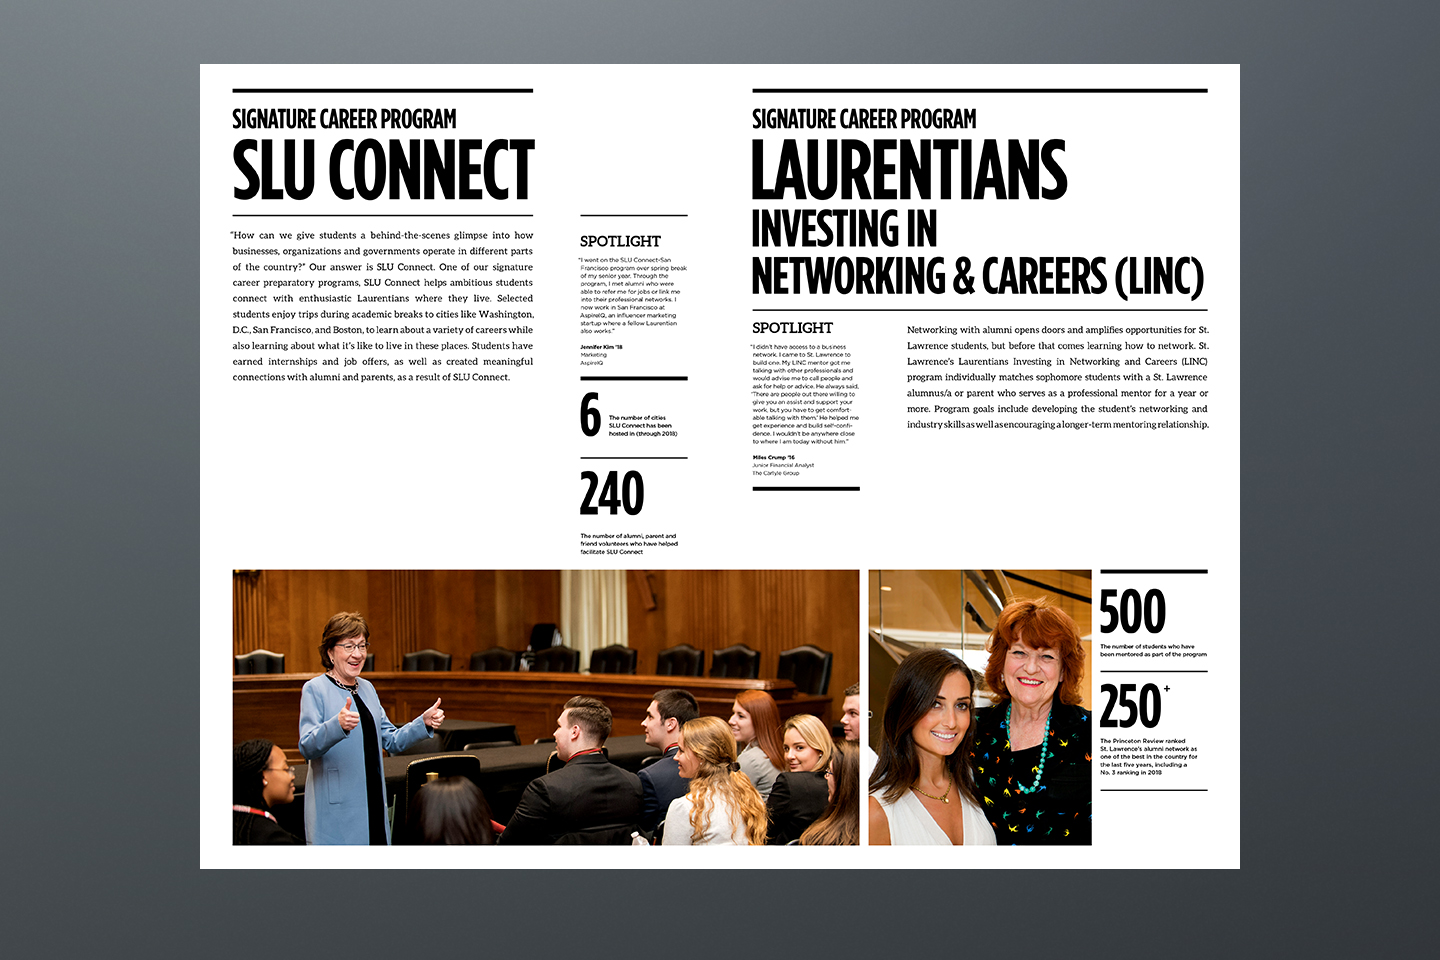 St. Lawrence University Career Brochure